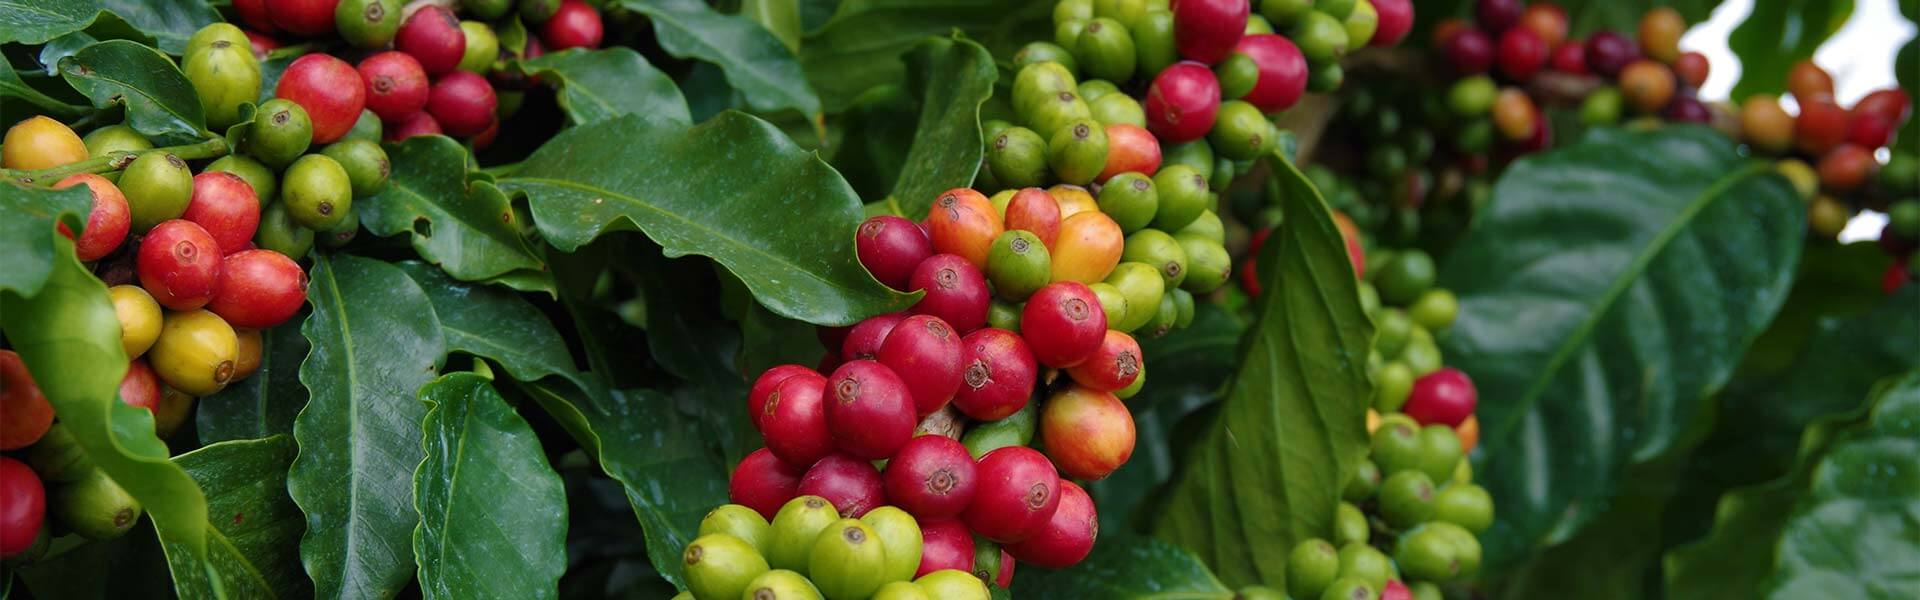 Hawaii Coffee Production Statistics - Big Island Coffee Roasters